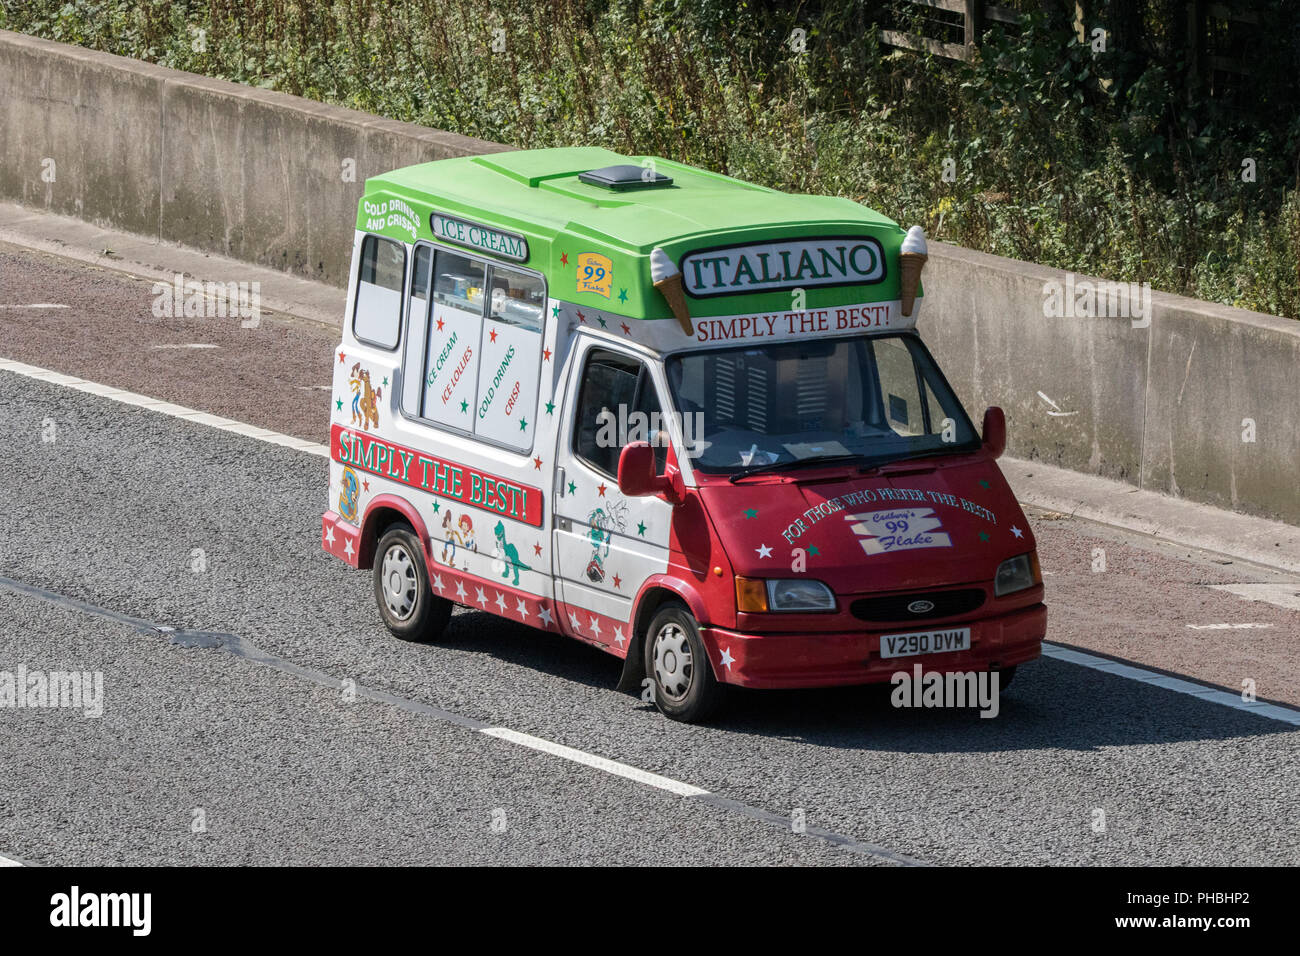 ford transit ice cream van for sale